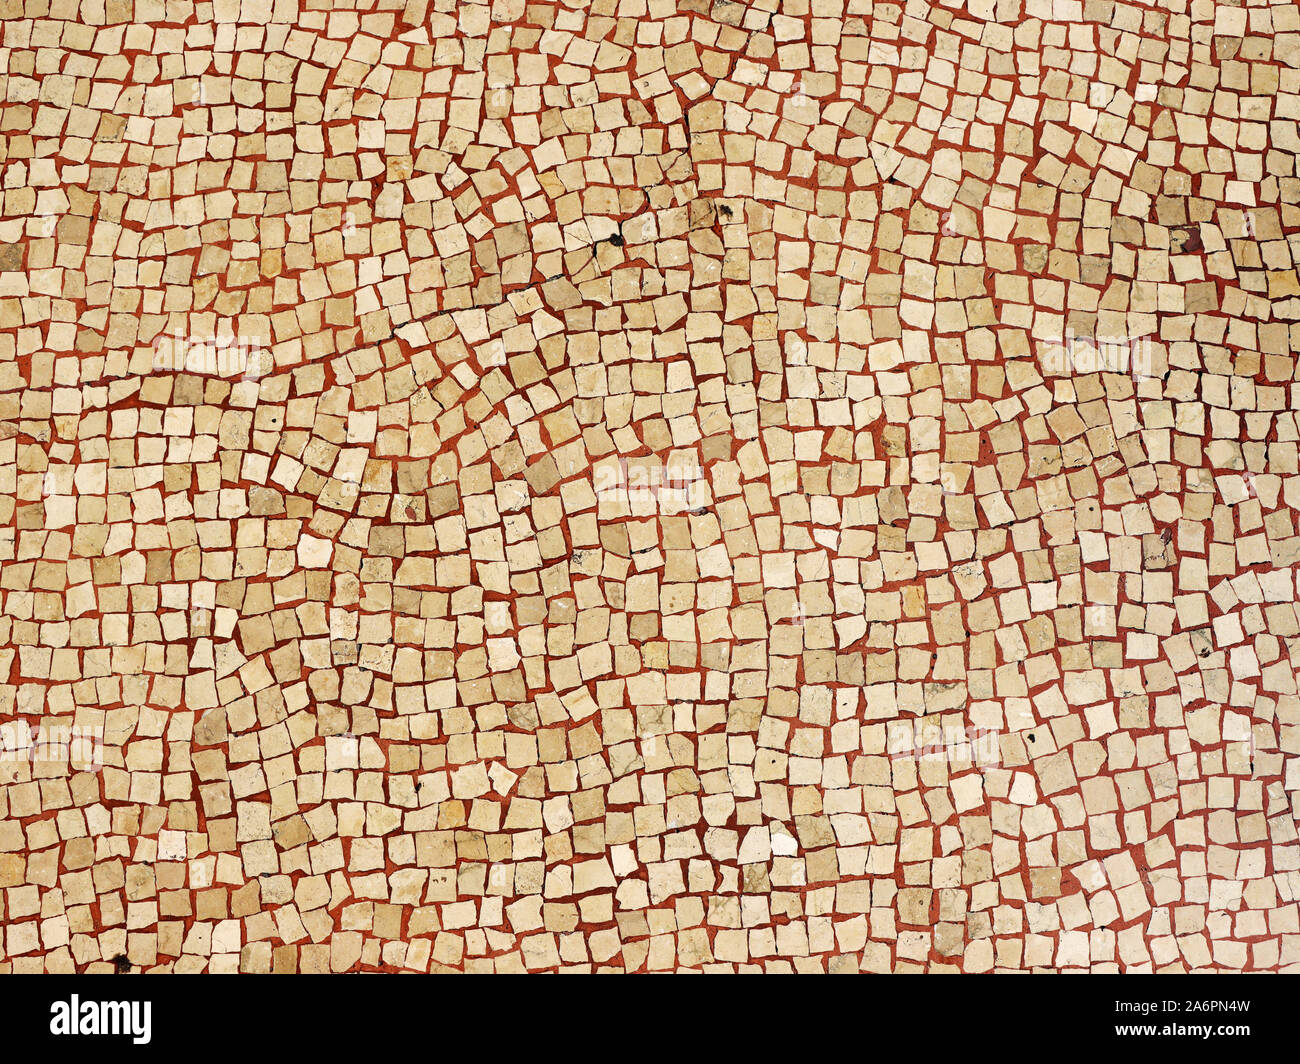 Mosaic flooring of multicolored small stones Stock Photo